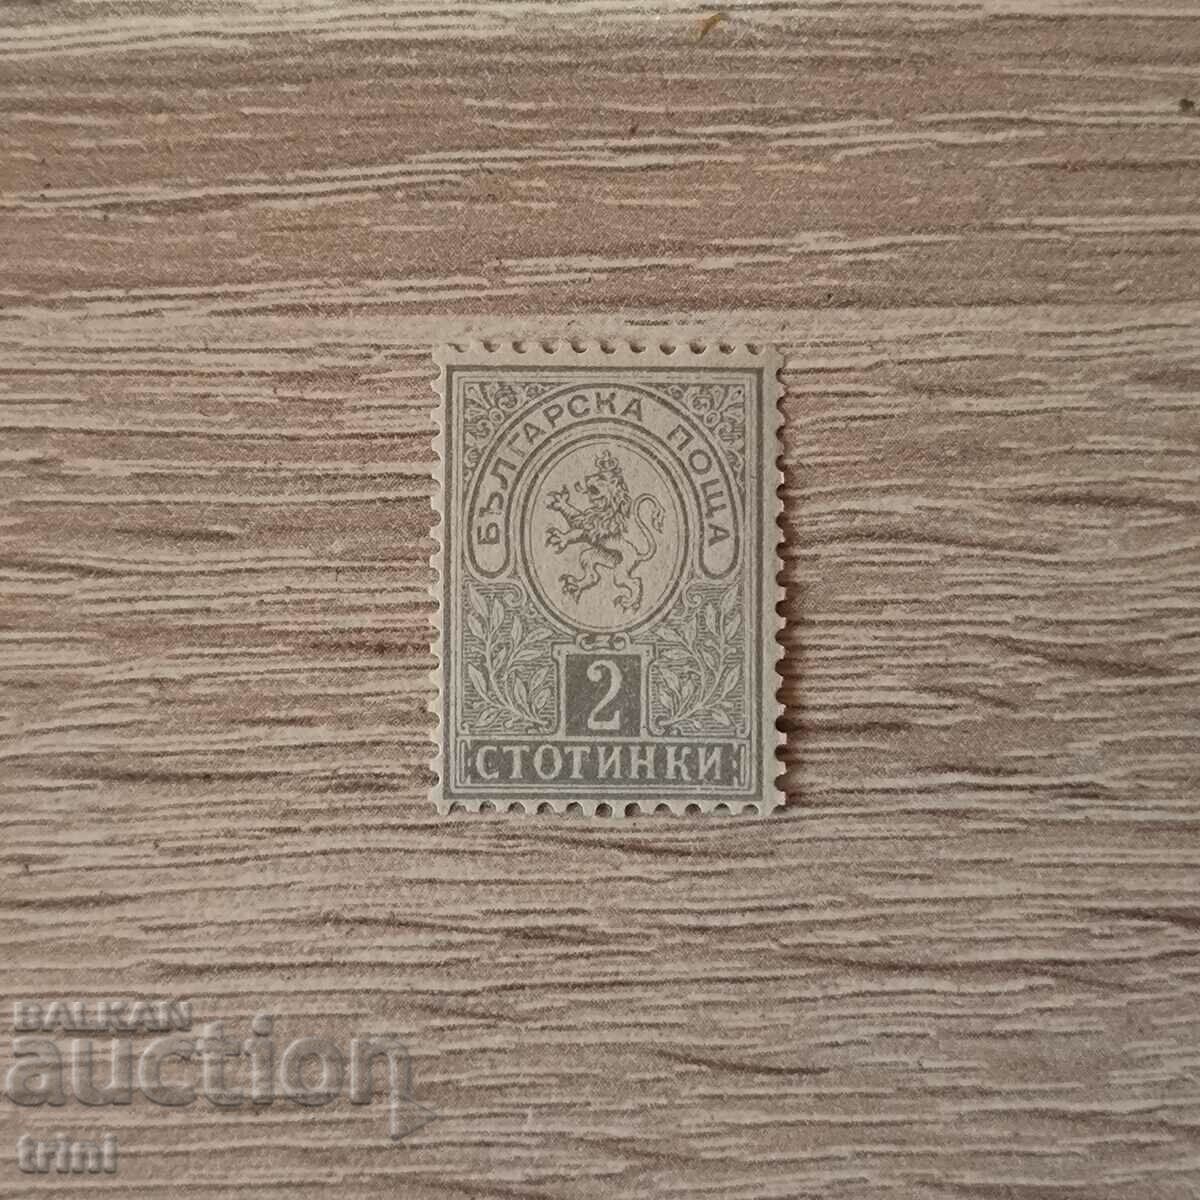 Bulgaria Small Lion 1889 2 cent, με λάστιχο